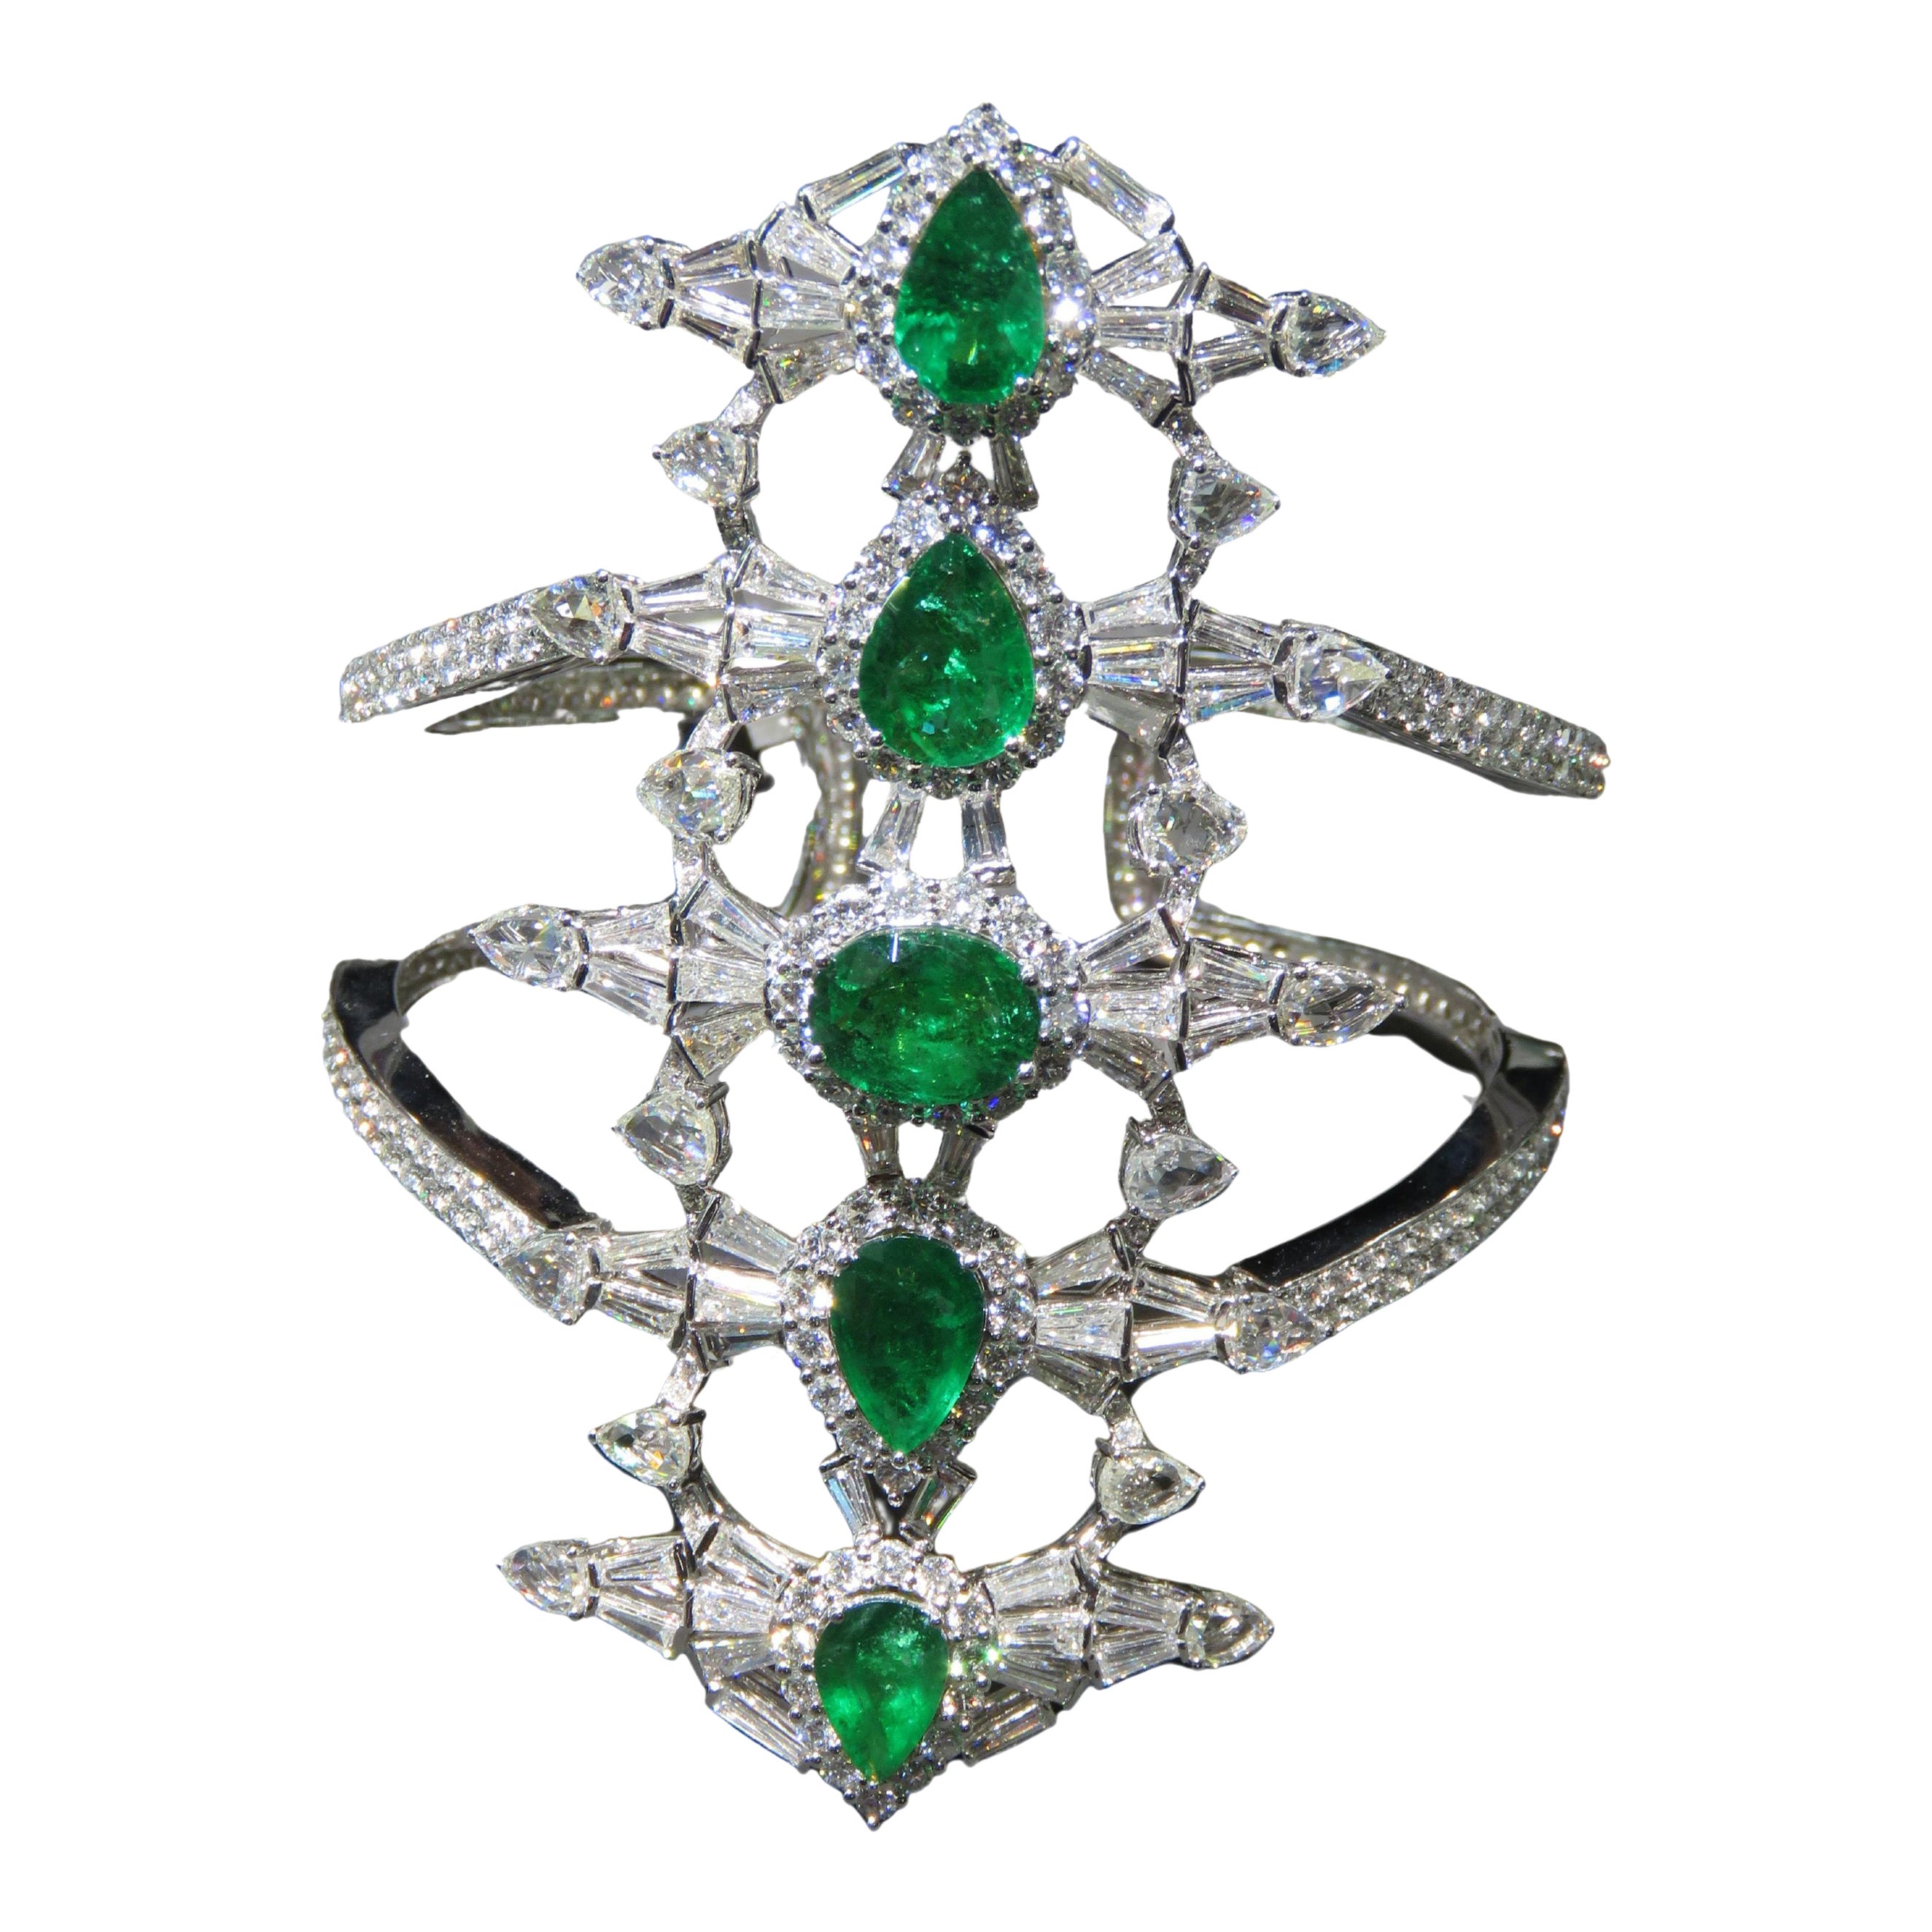 NEU $124, 900 18KT Gold Seltenes wichtiges Fancy 25CT Smaragd-Diamant-Armband, Unikat